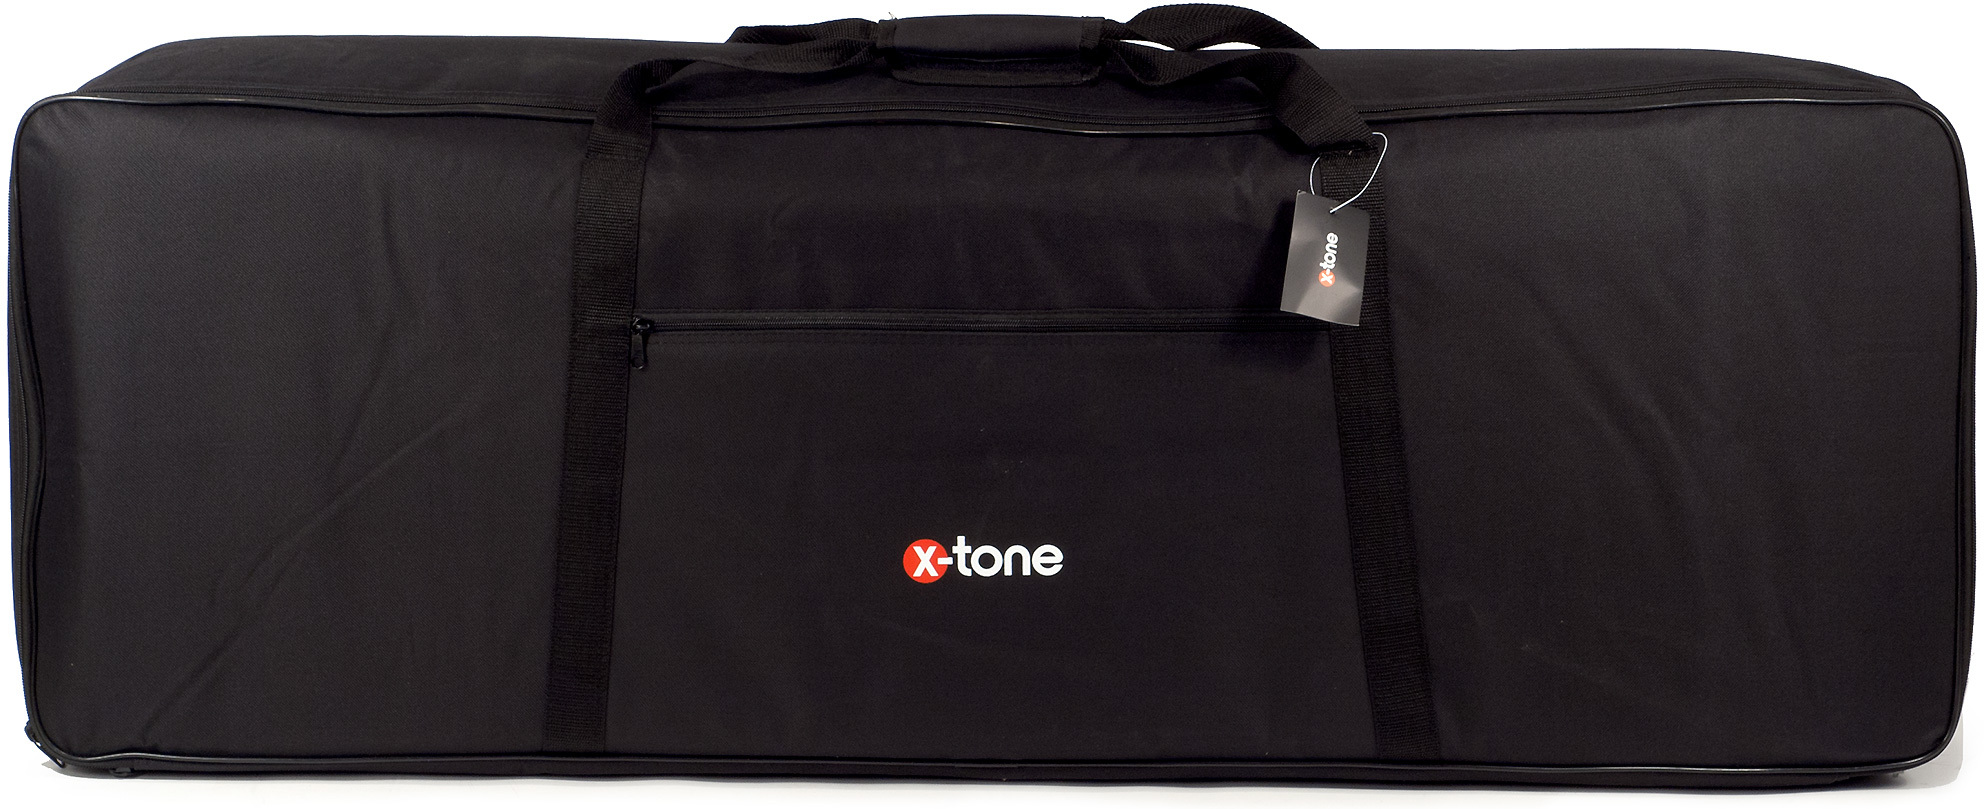 X-tone 2100 Pour Clavier 61 Notes En 10 Mm Black - Tasche für Keyboard - Main picture